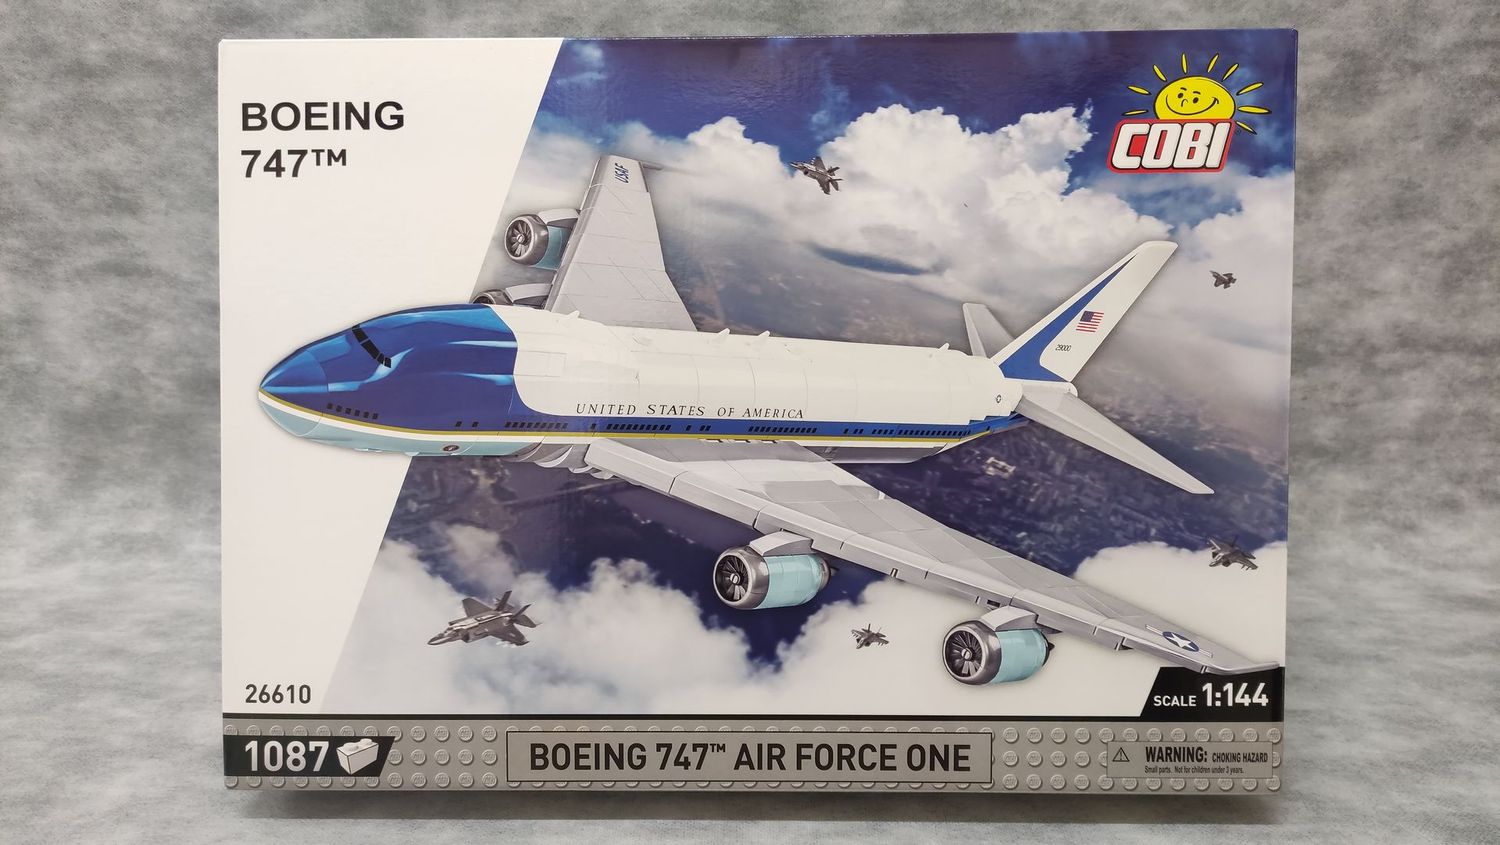 COBI - 26610 - BOEING 747 AIR FORCE ONE